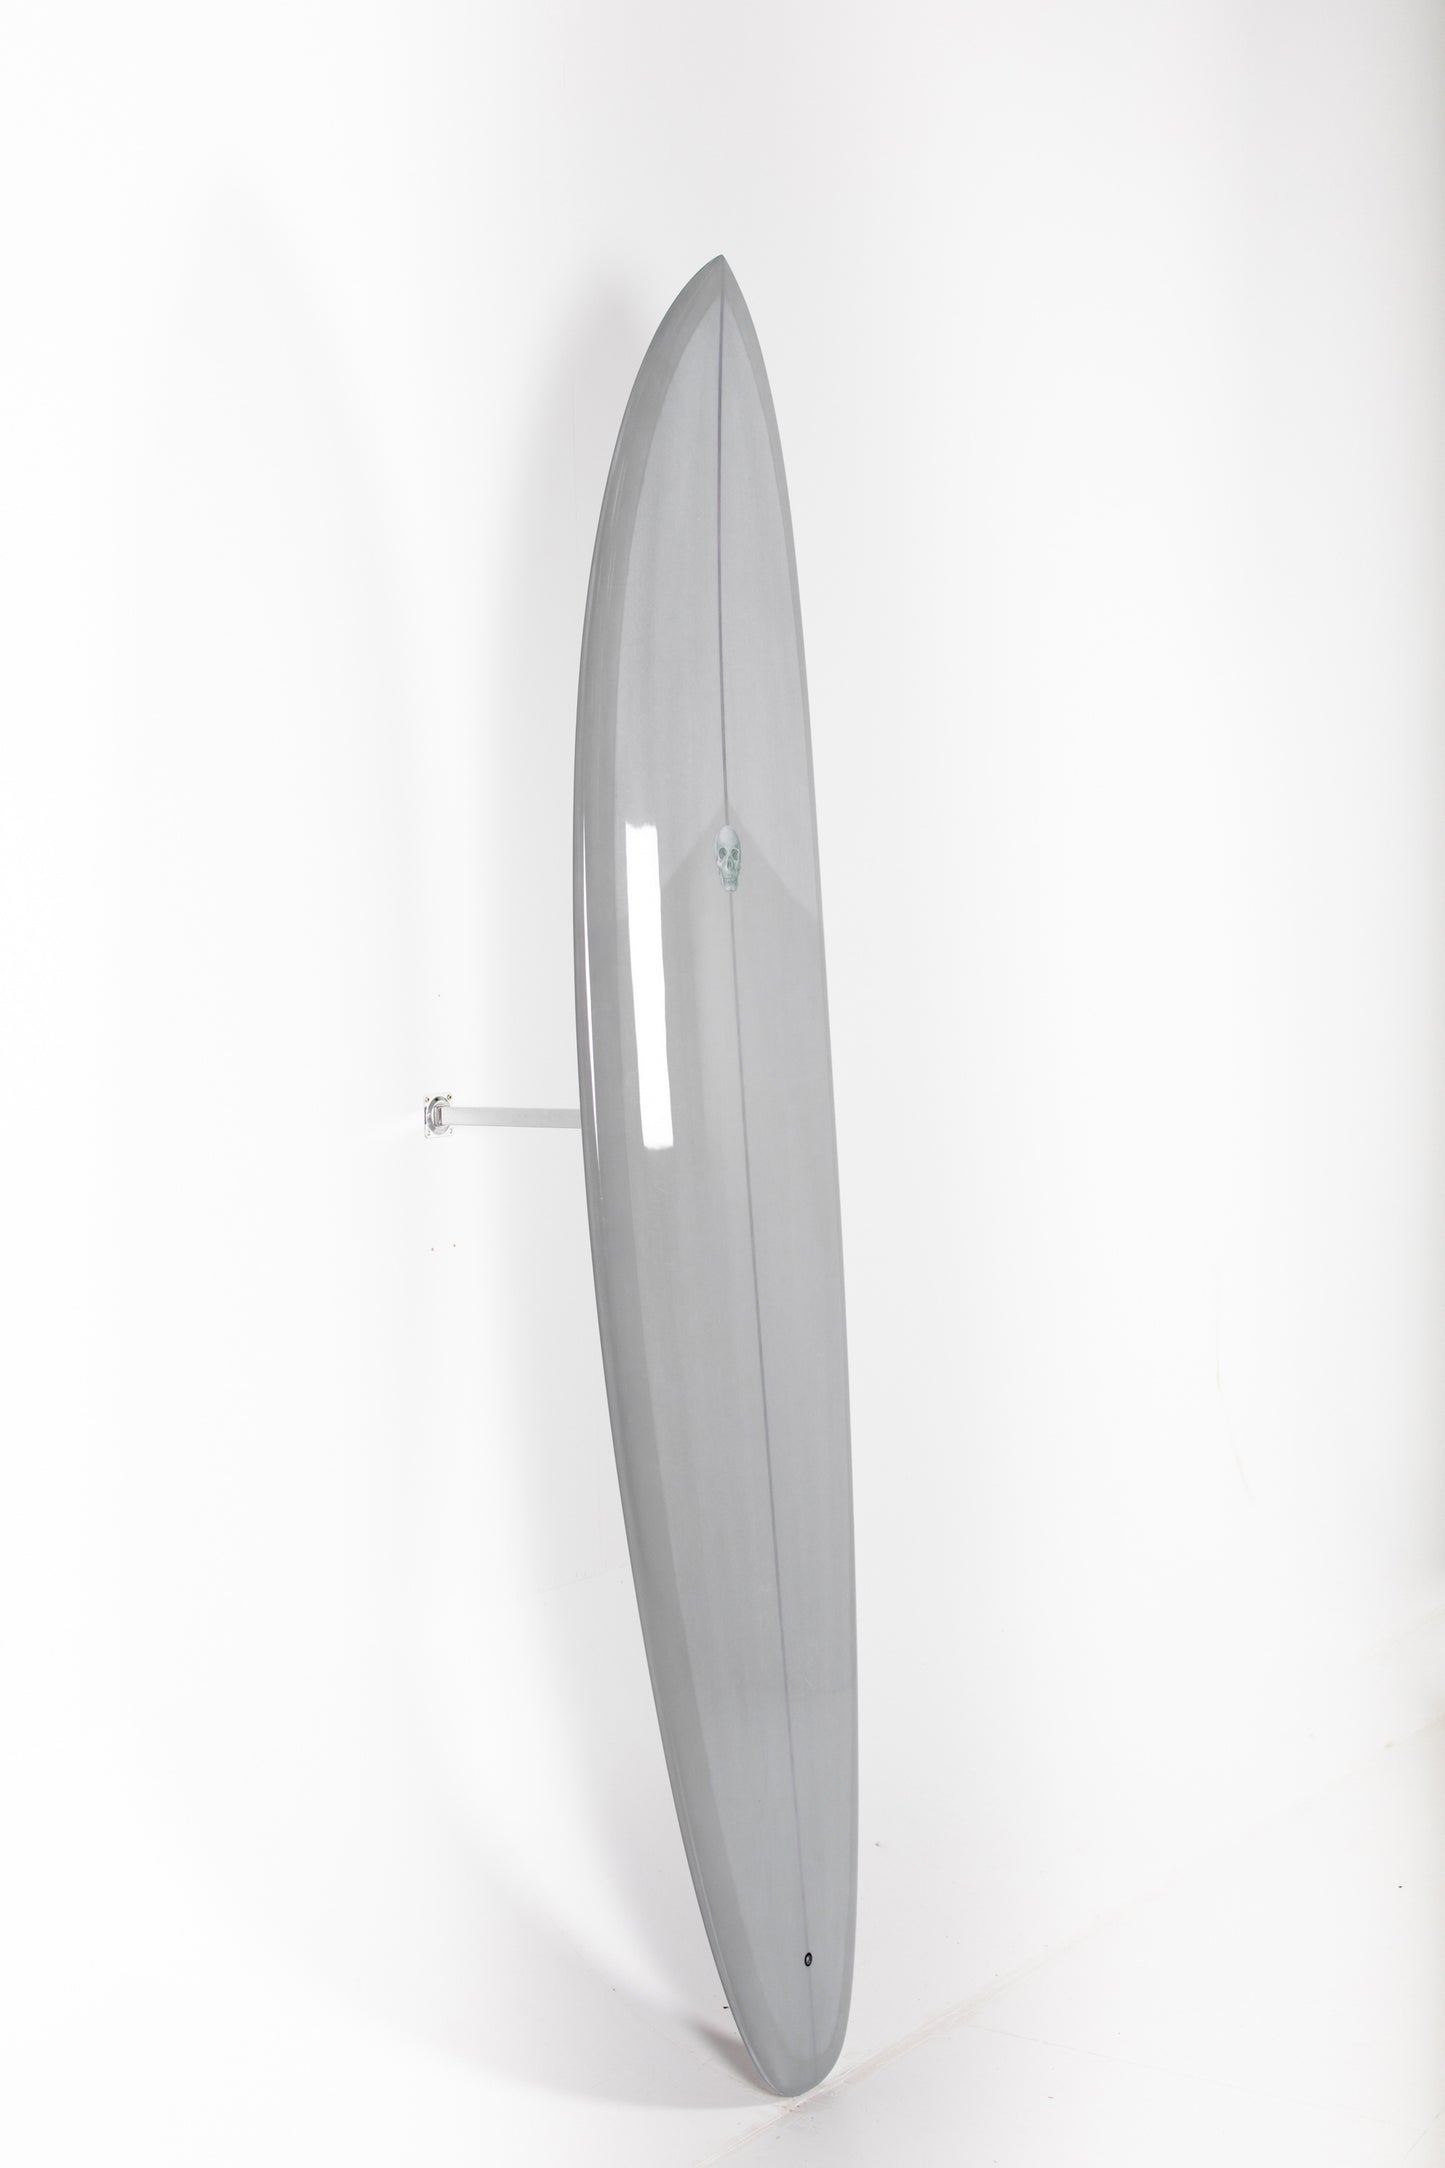 
                  
                    Pukas Surf Shop - Christenson Surfboards - FLAT TRACKER 2.0 - 7'8" x 21 1/4 x 2 7/8 - CX03144
                  
                